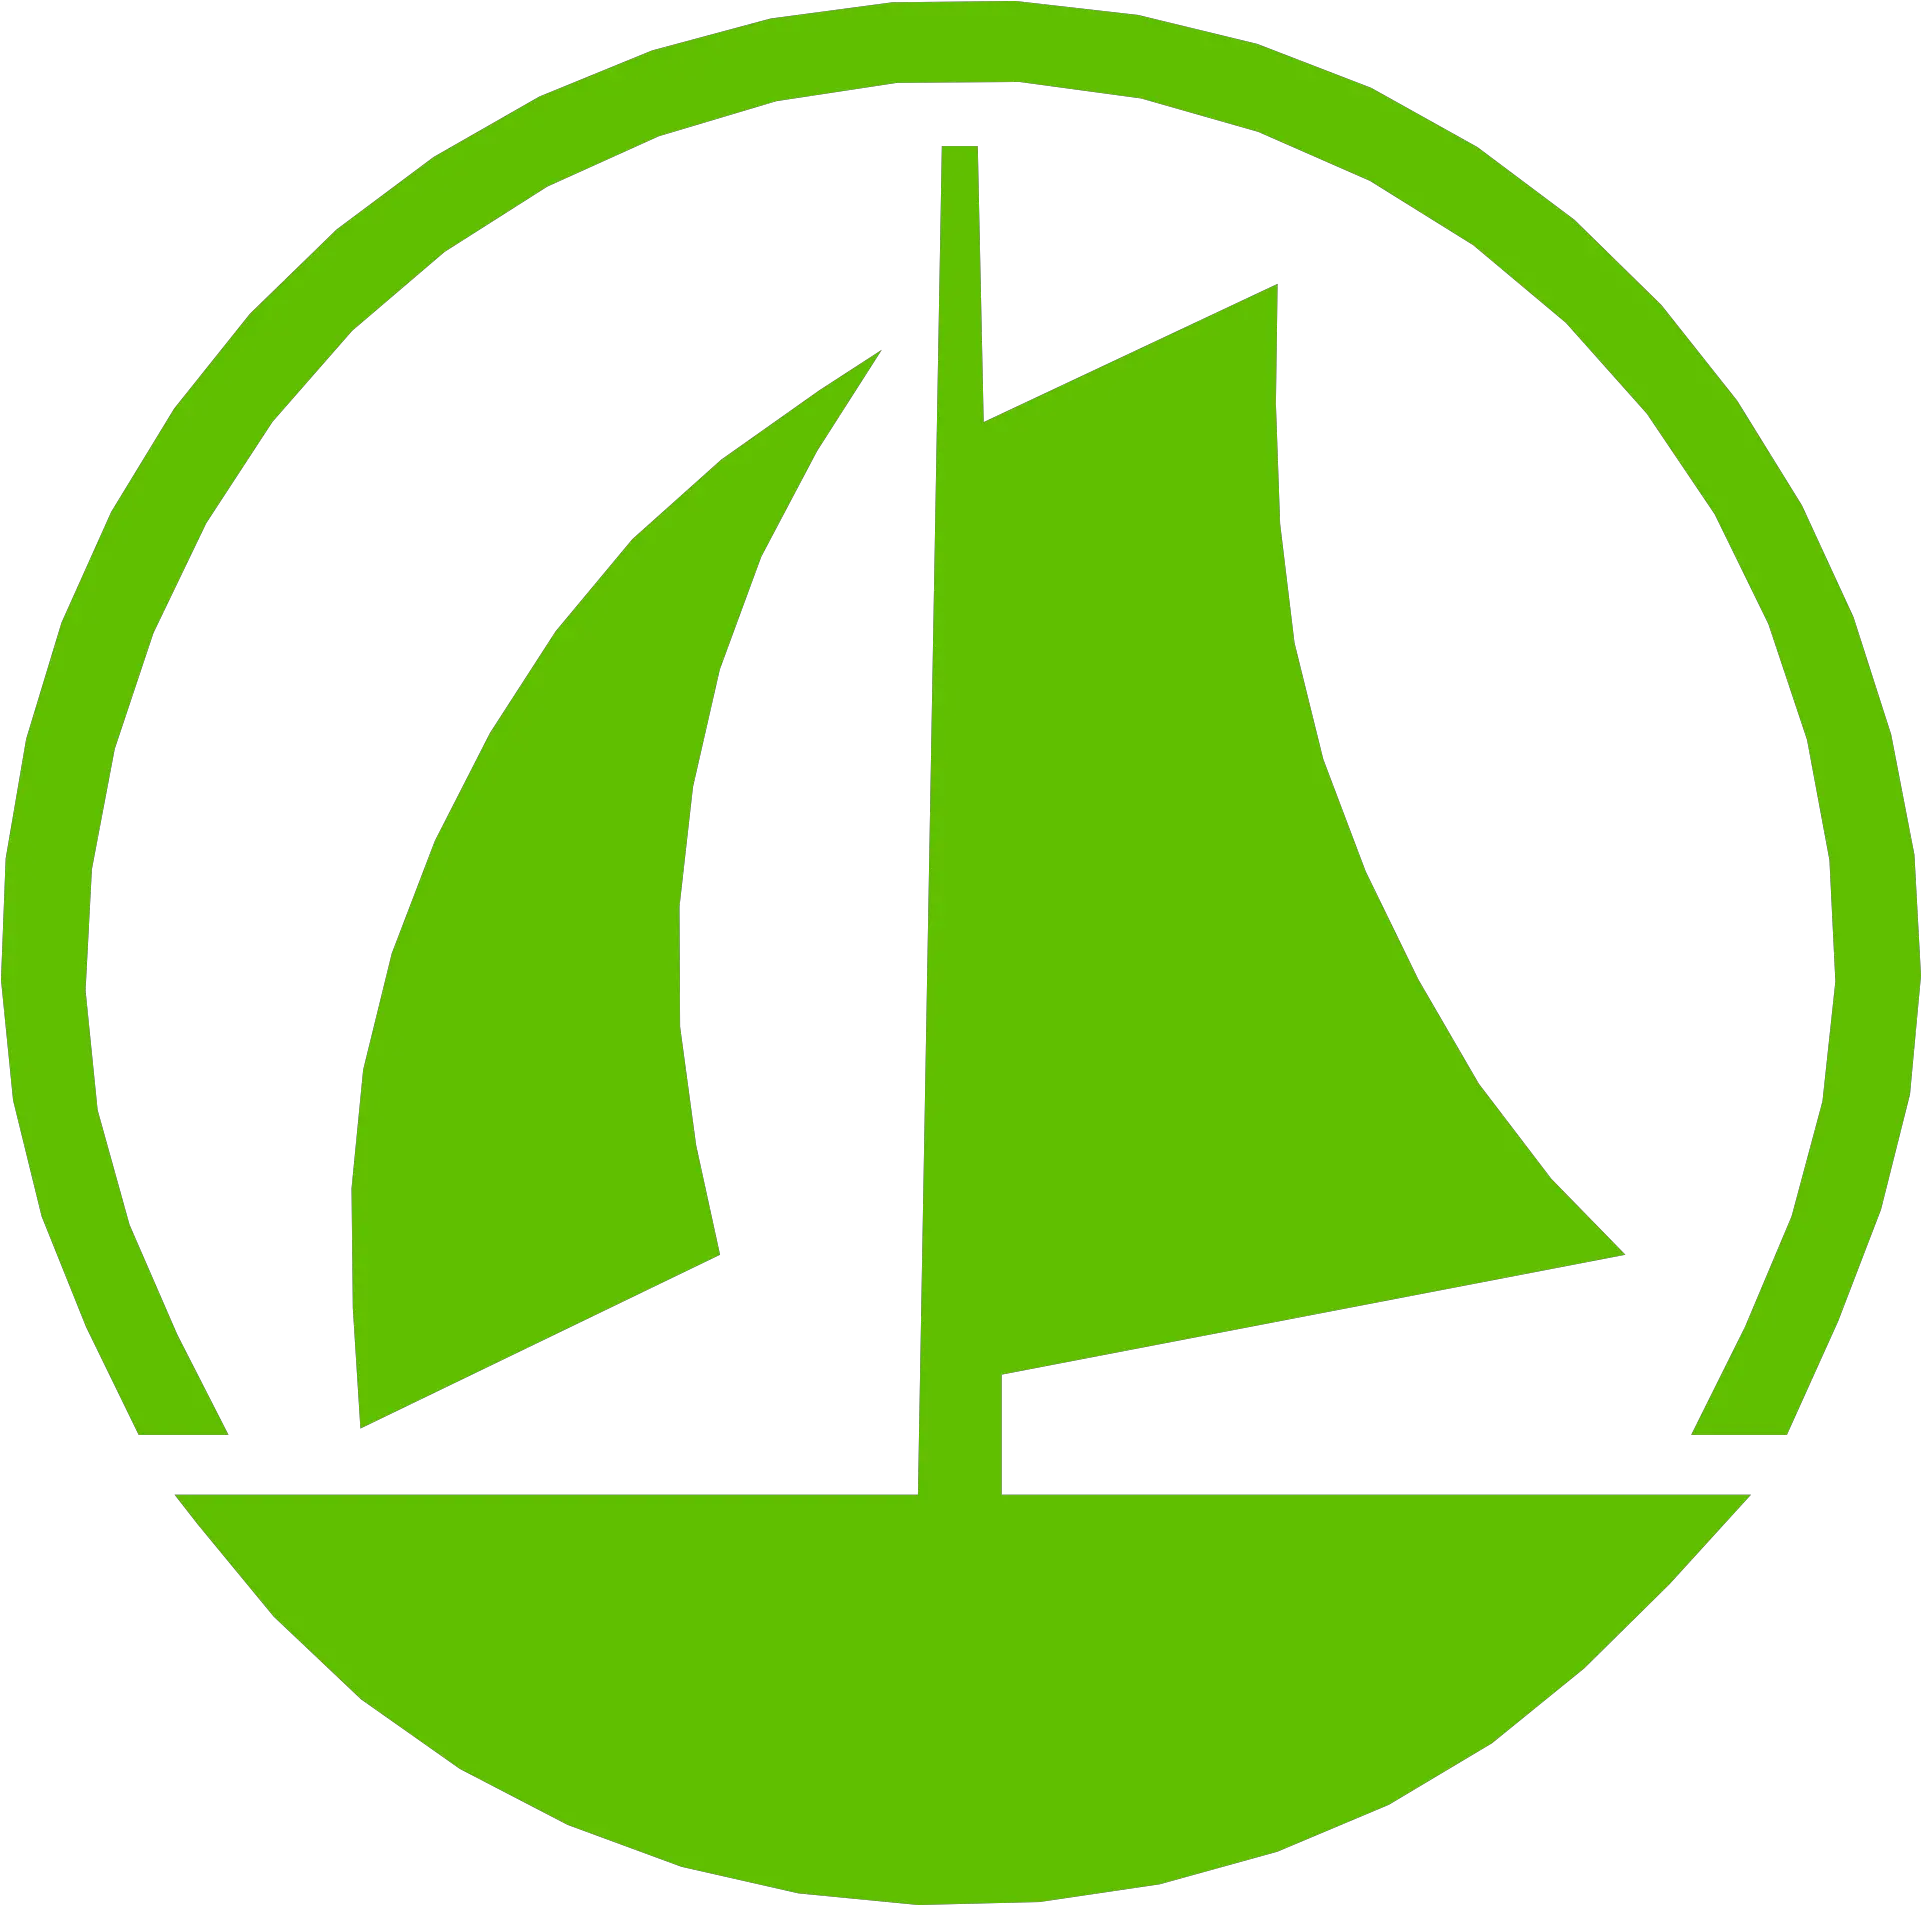 Sail Boat Icon Free Image Download Marina Symbol Png Yacht Icon